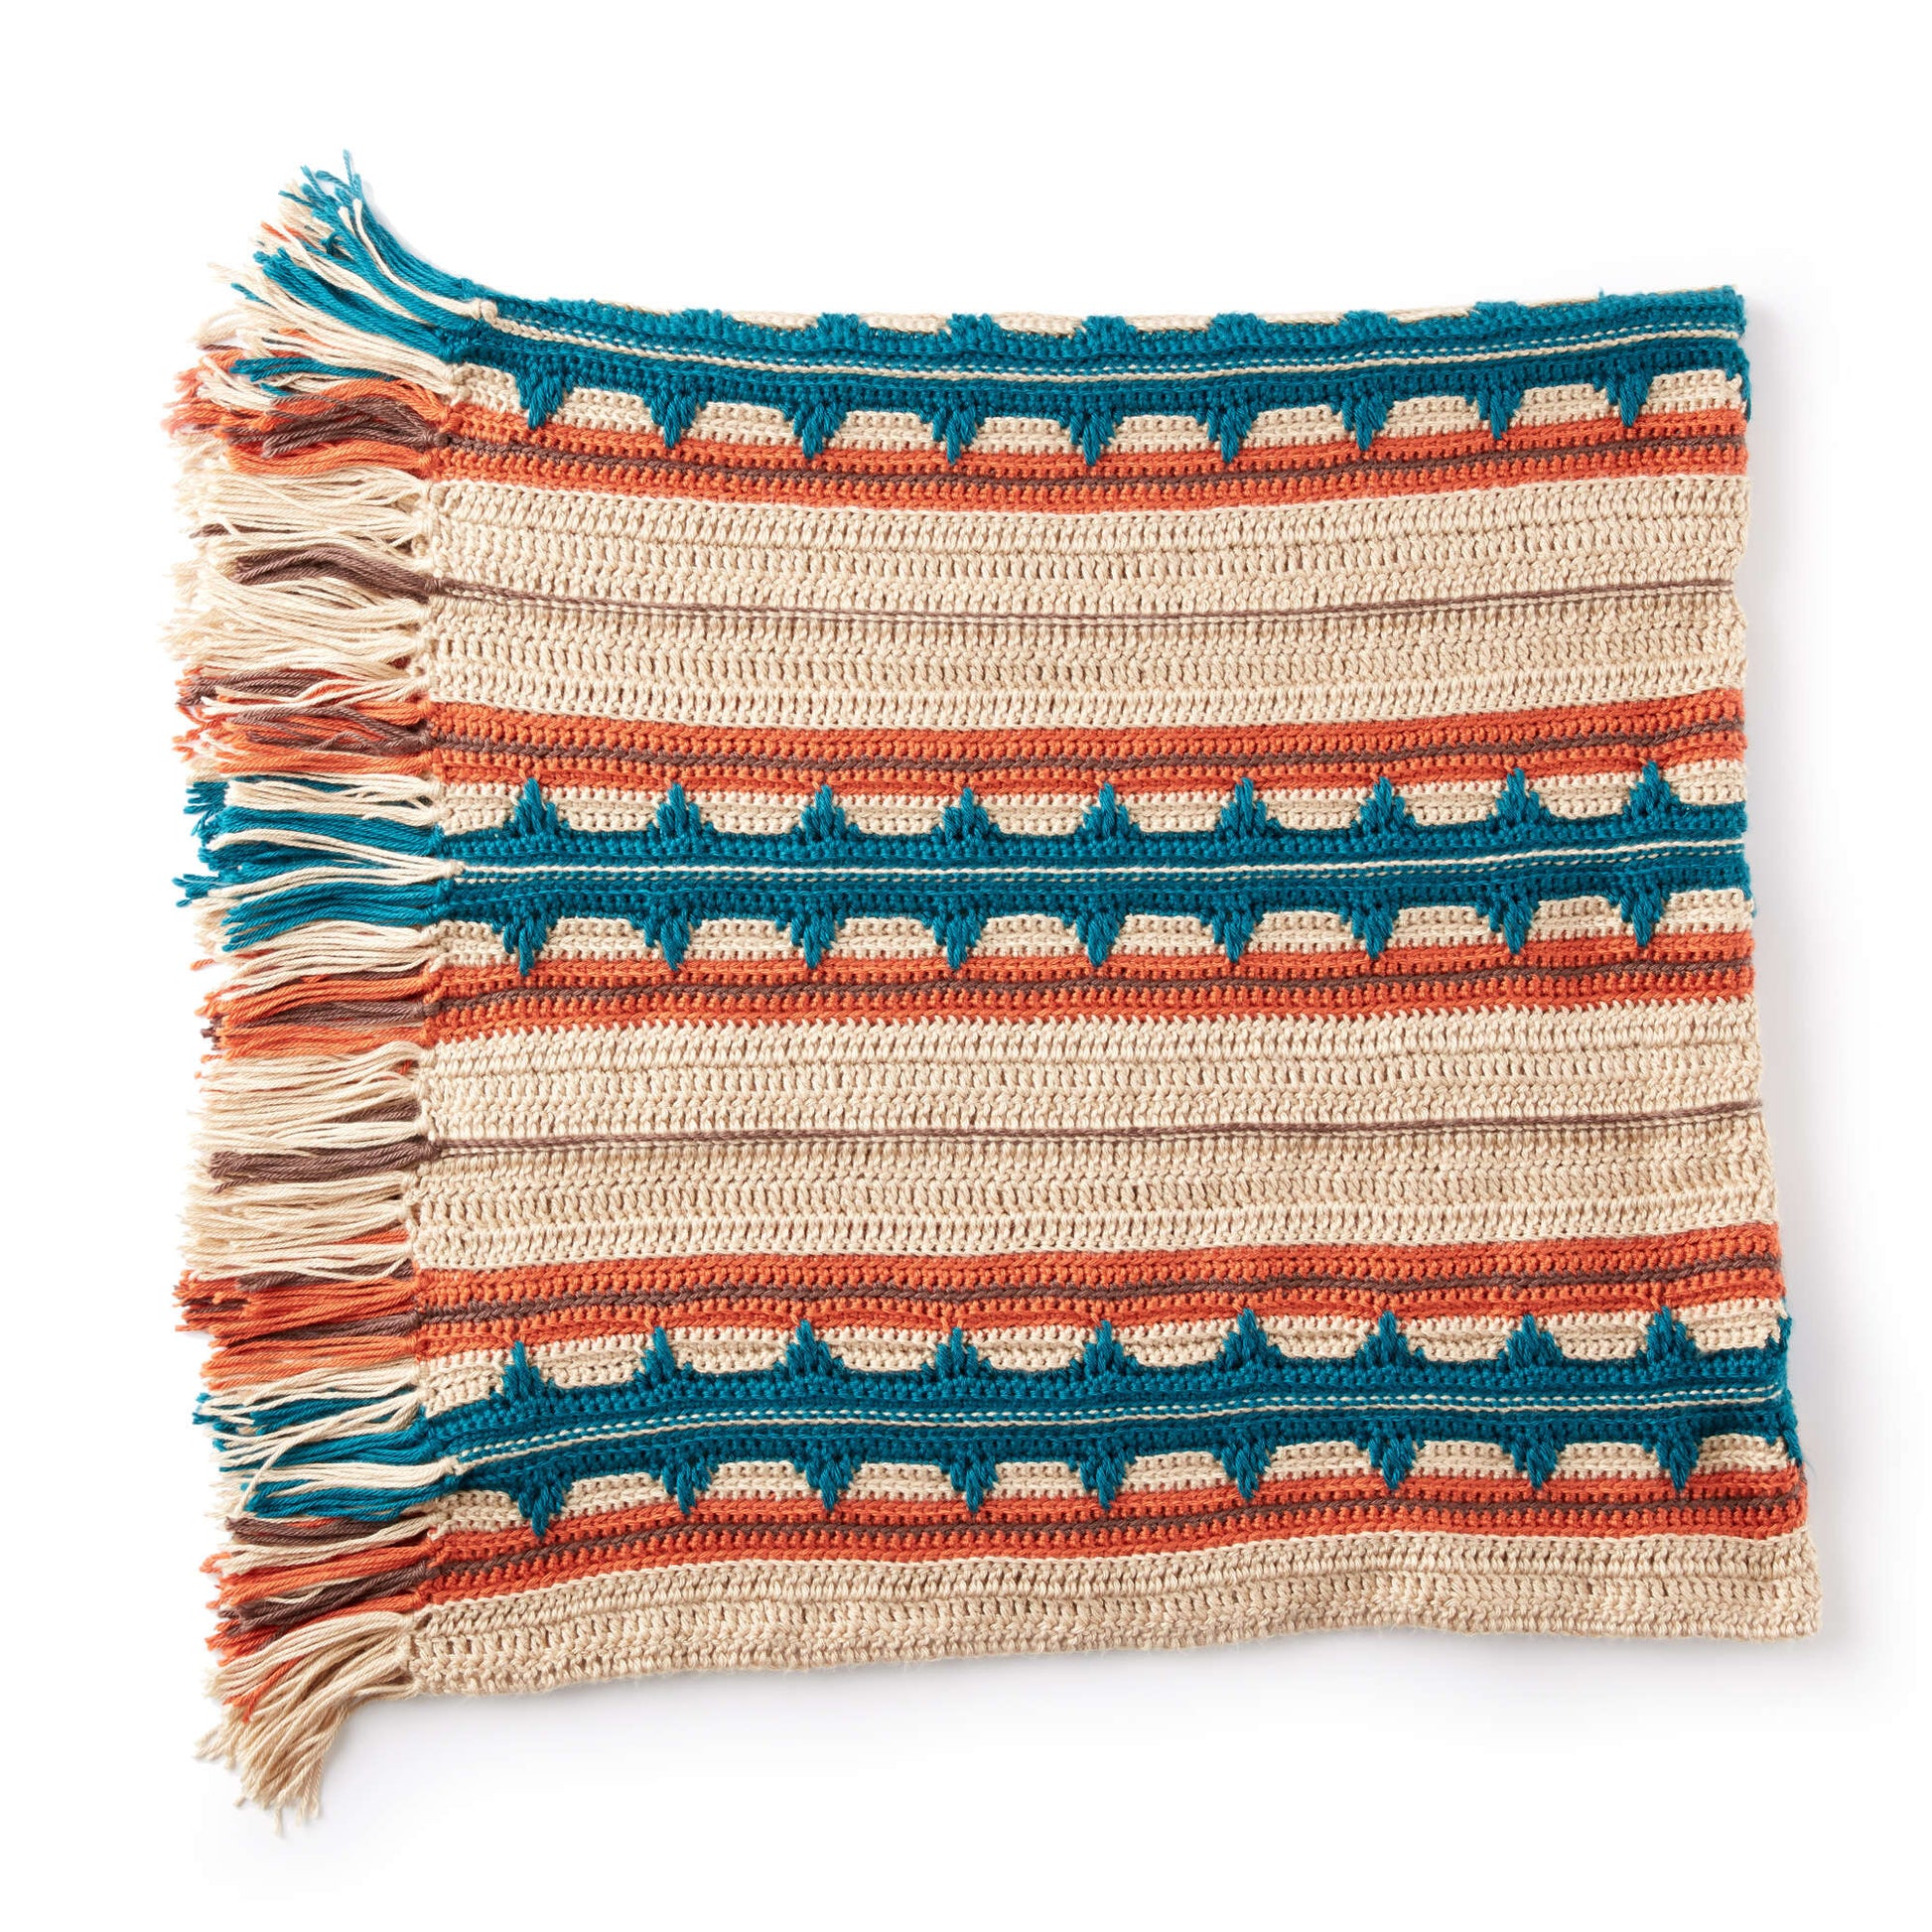 Caron Southwest Stripe Crochet Blanket Single Size